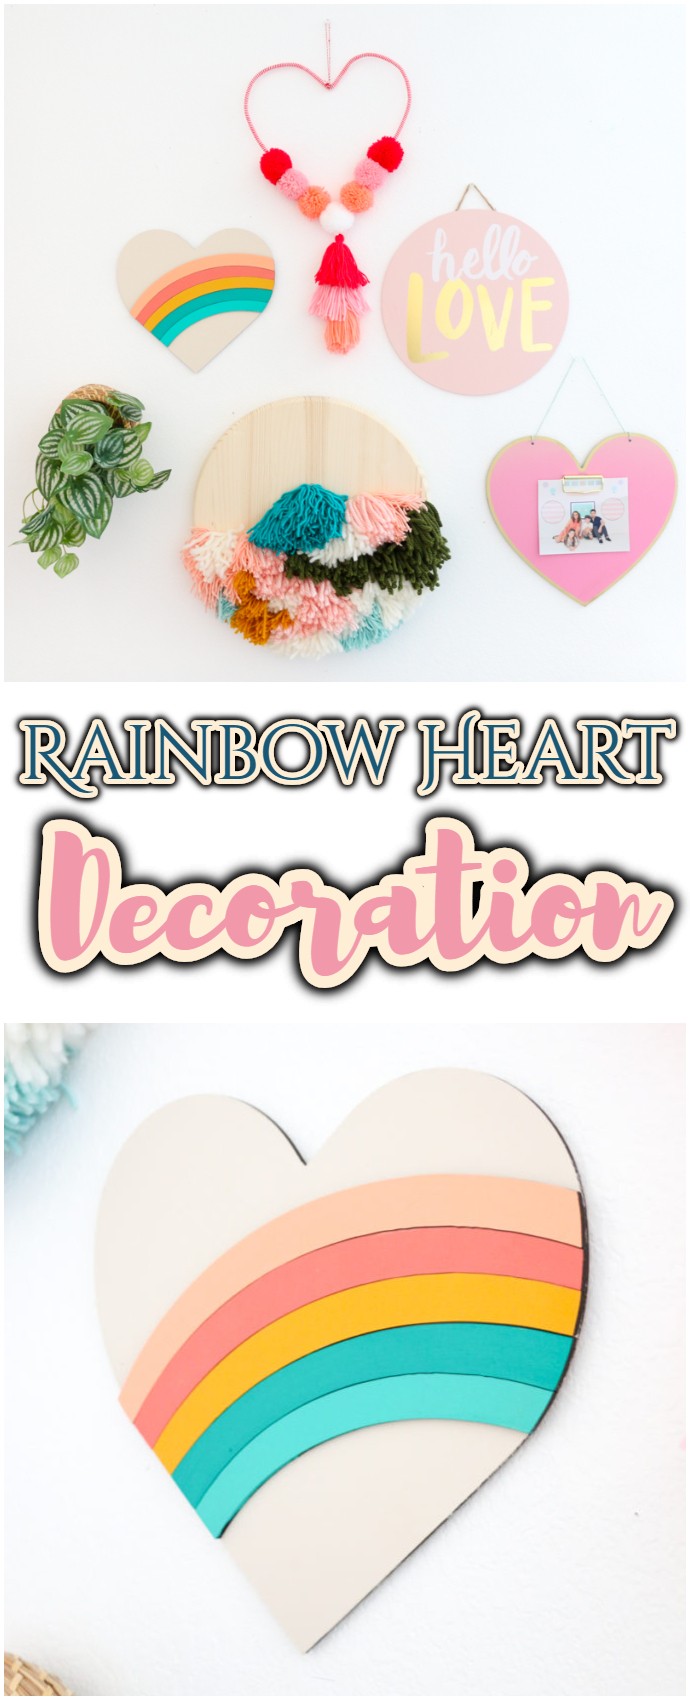 Diy Rainbow Heart Decoration With The Glowforge